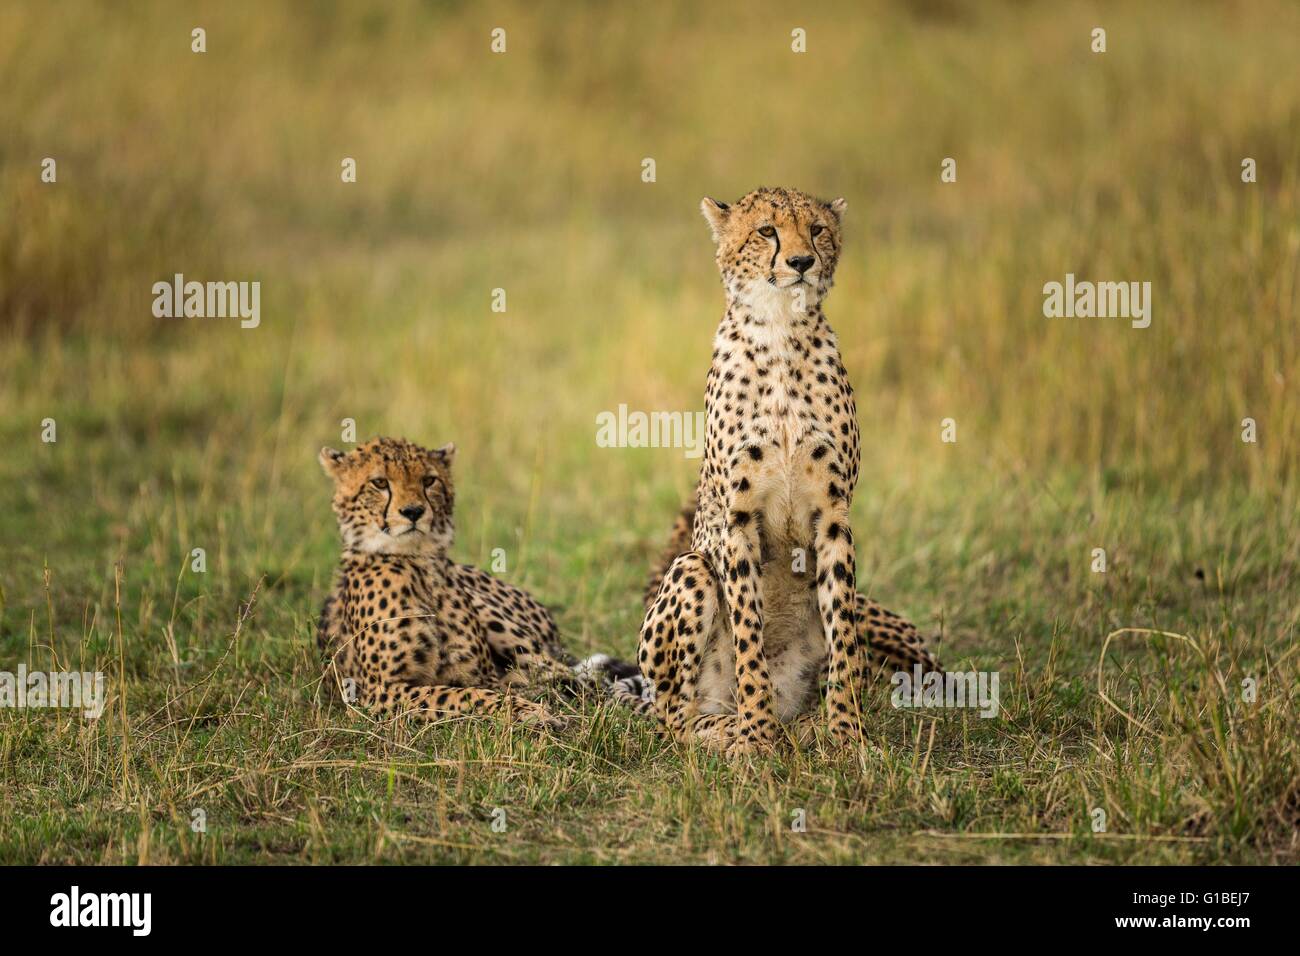 Kenia, Masai Mara Wildreservat, Cheetah (Acinonyx Jubatus), jungen 15 Monate alt und ihre Mutter Stockfoto